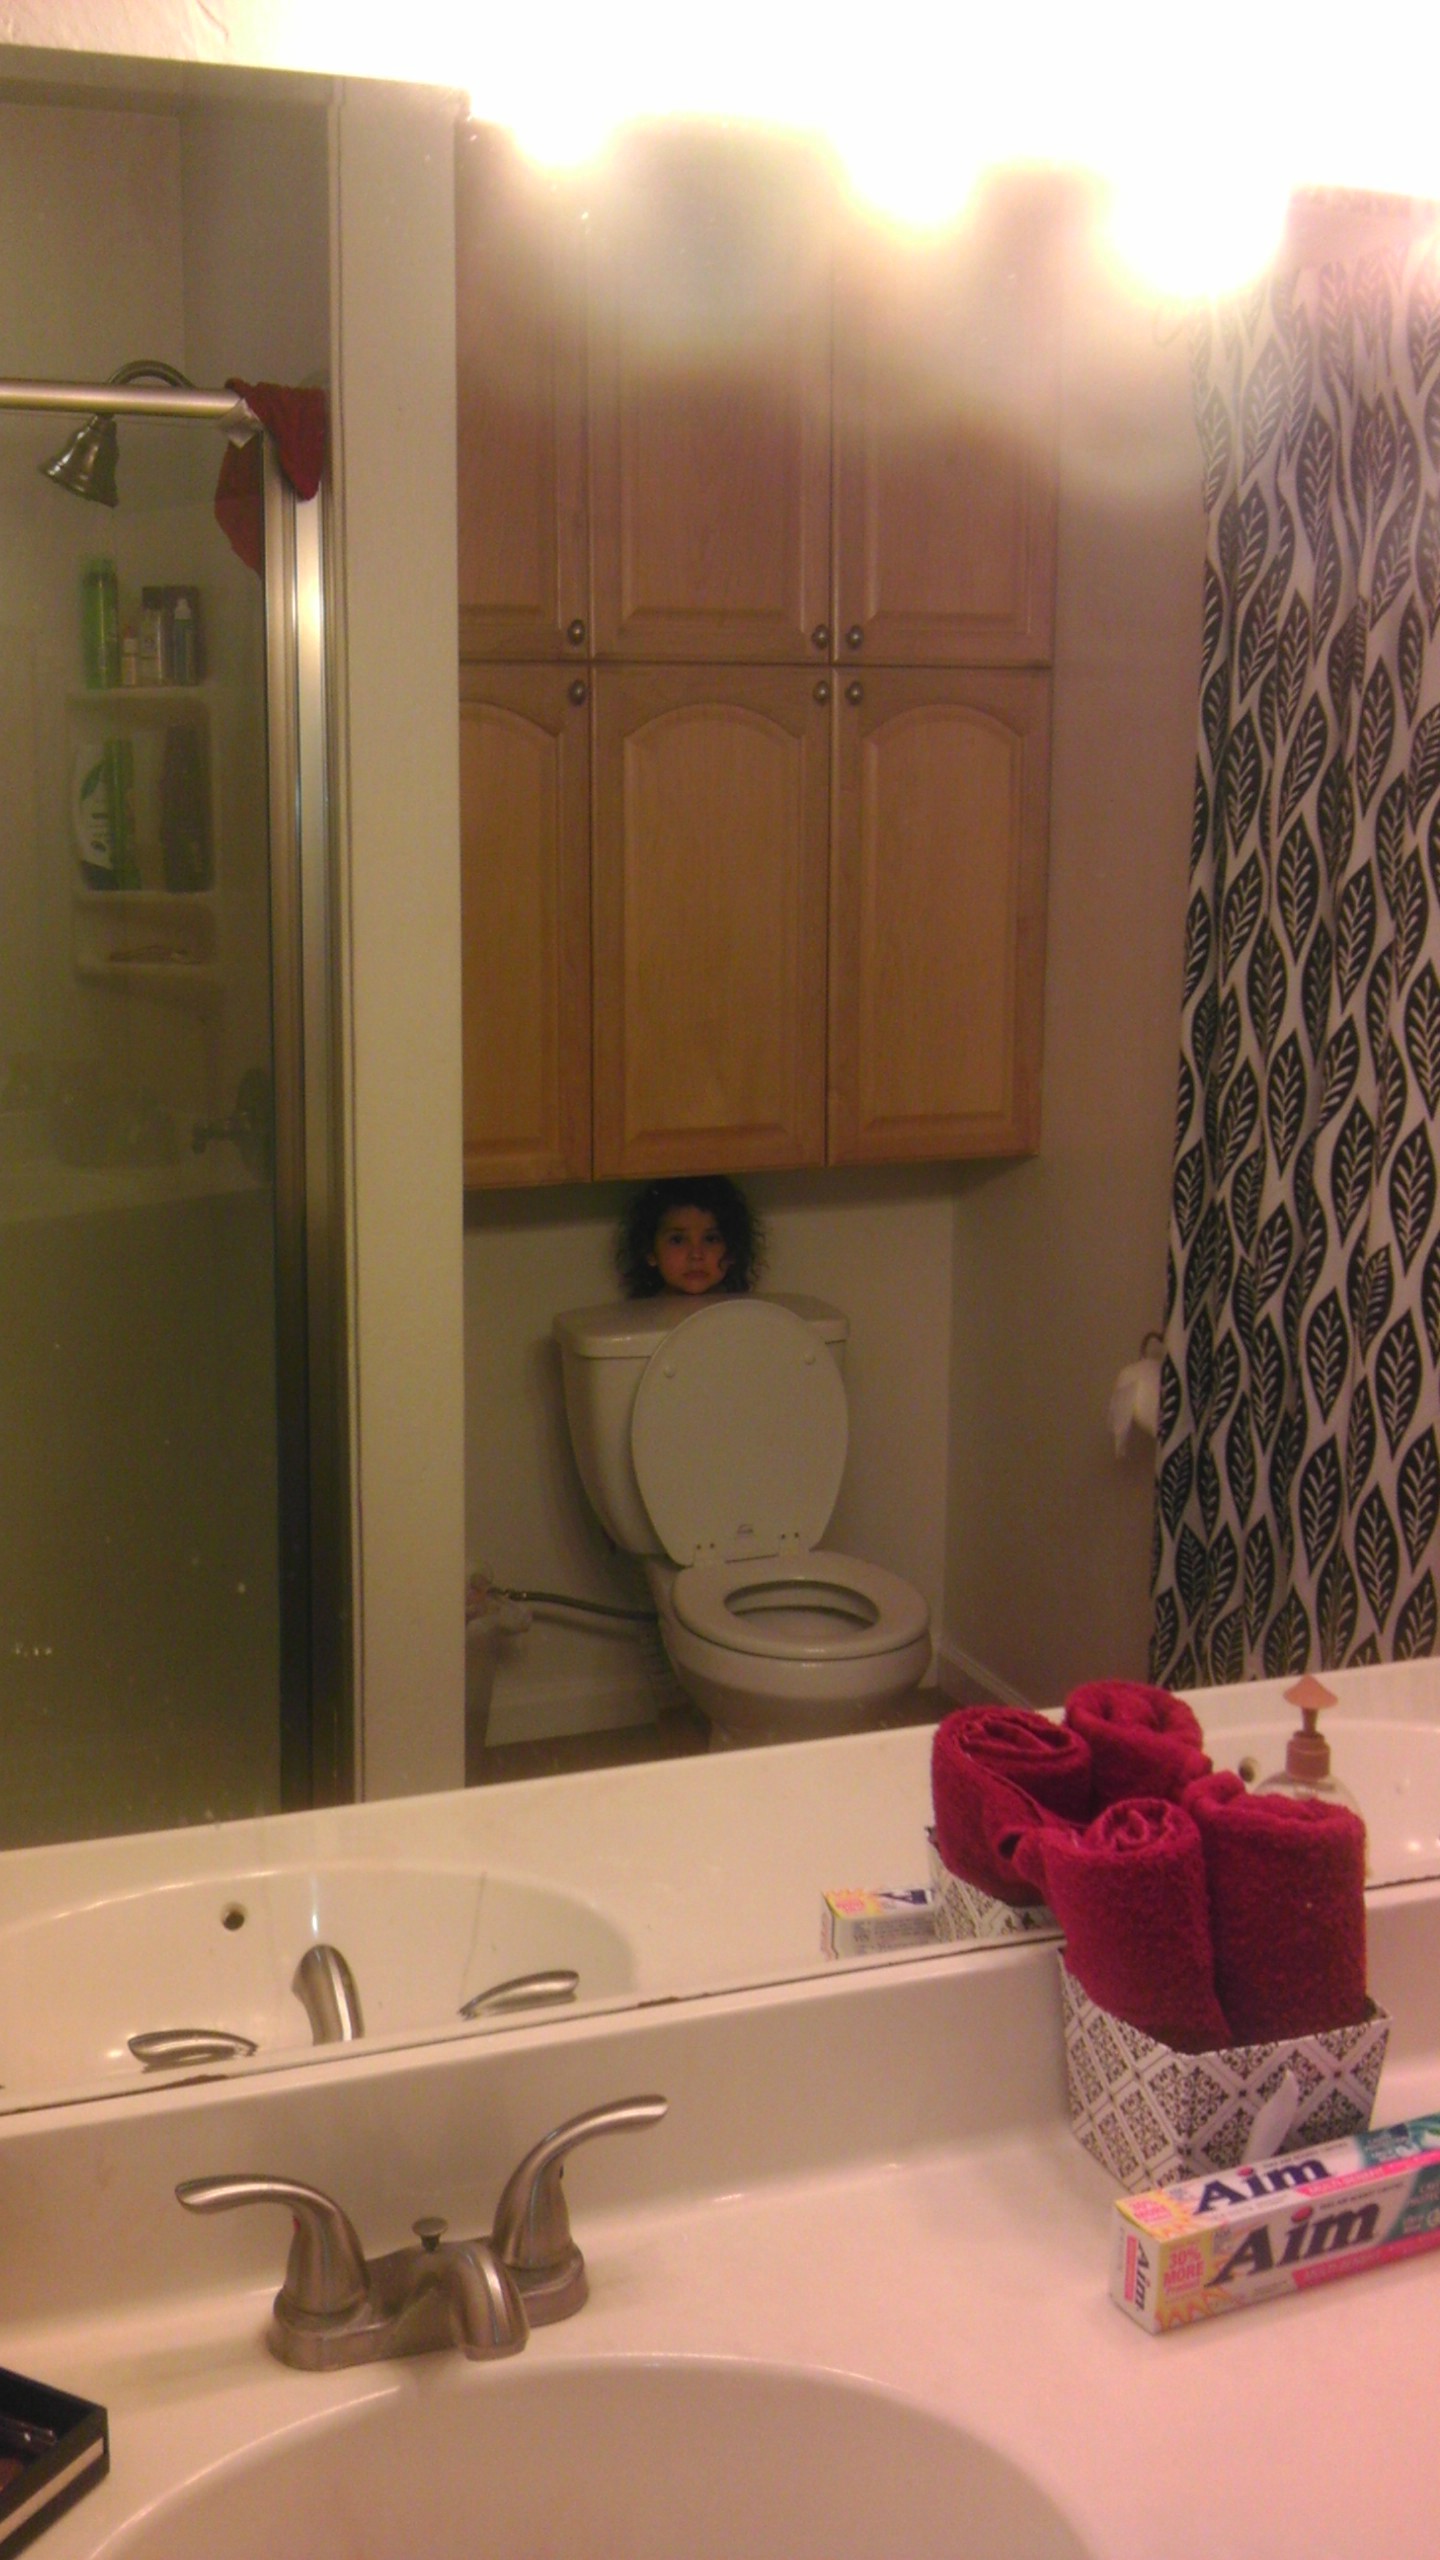 Little girl hiding behind a toilet